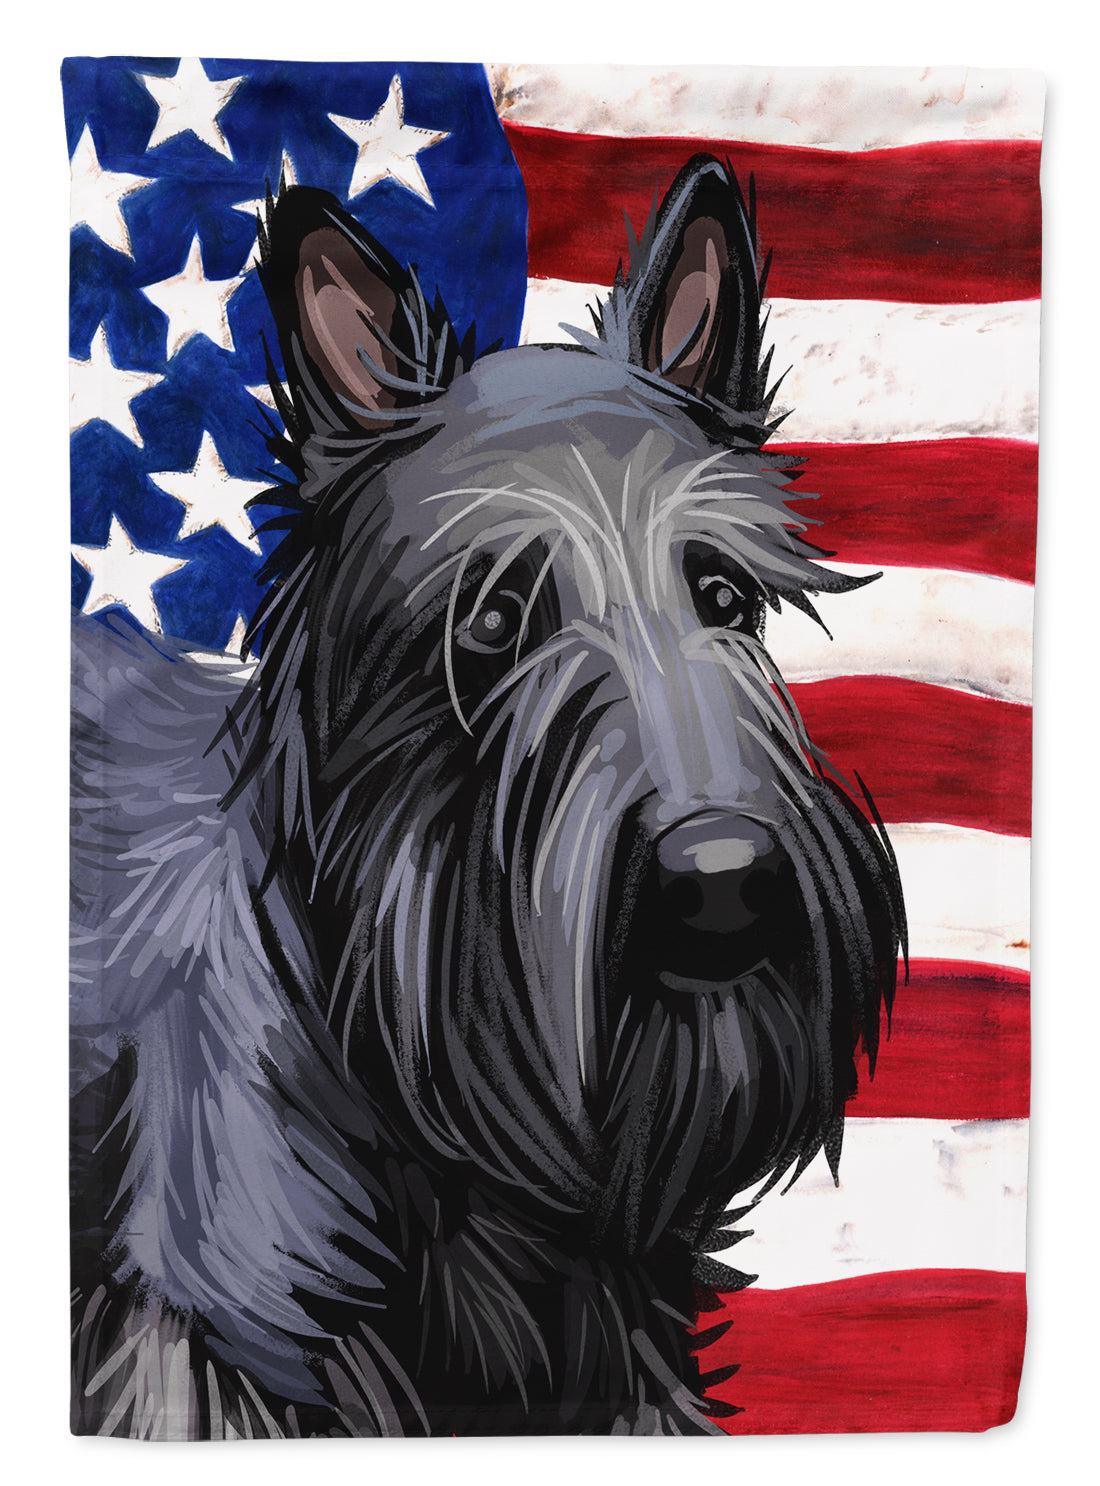 Scottish Terrier Dog American Flag Flag Garden Size CK6696GF  the-store.com.